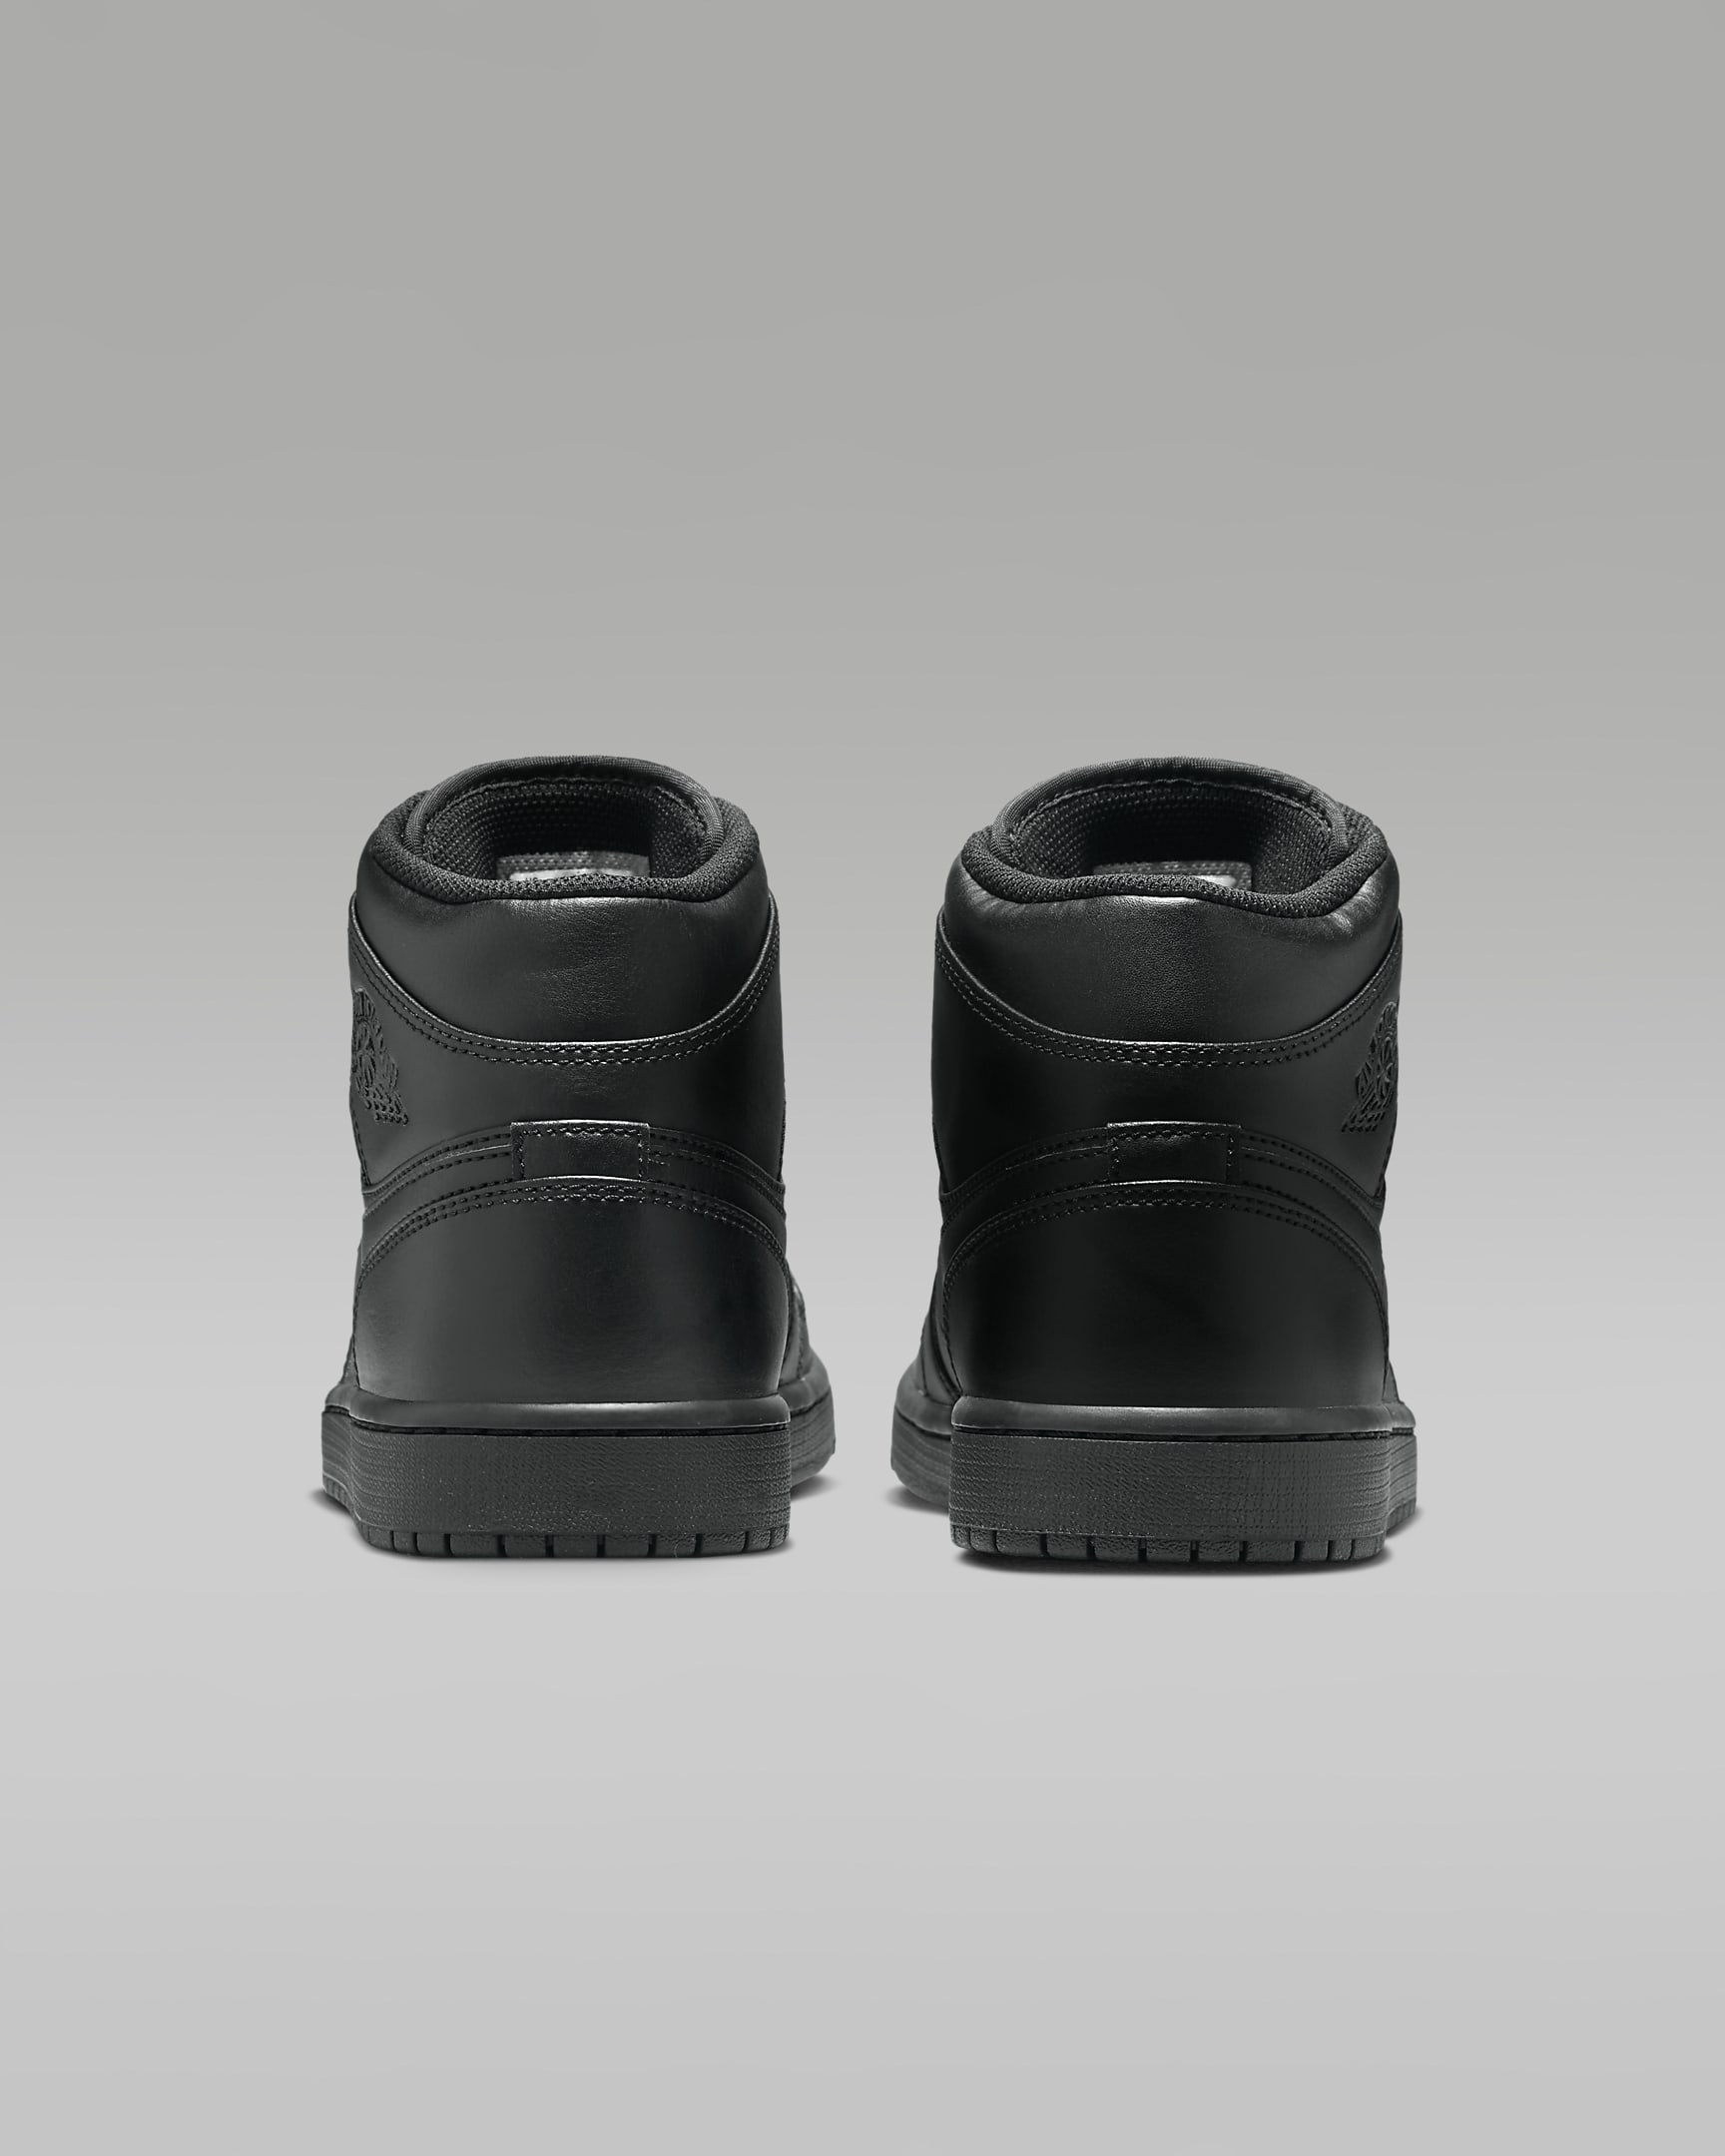 Air Jordan 1 Mid Shoes - Black/Black/Black